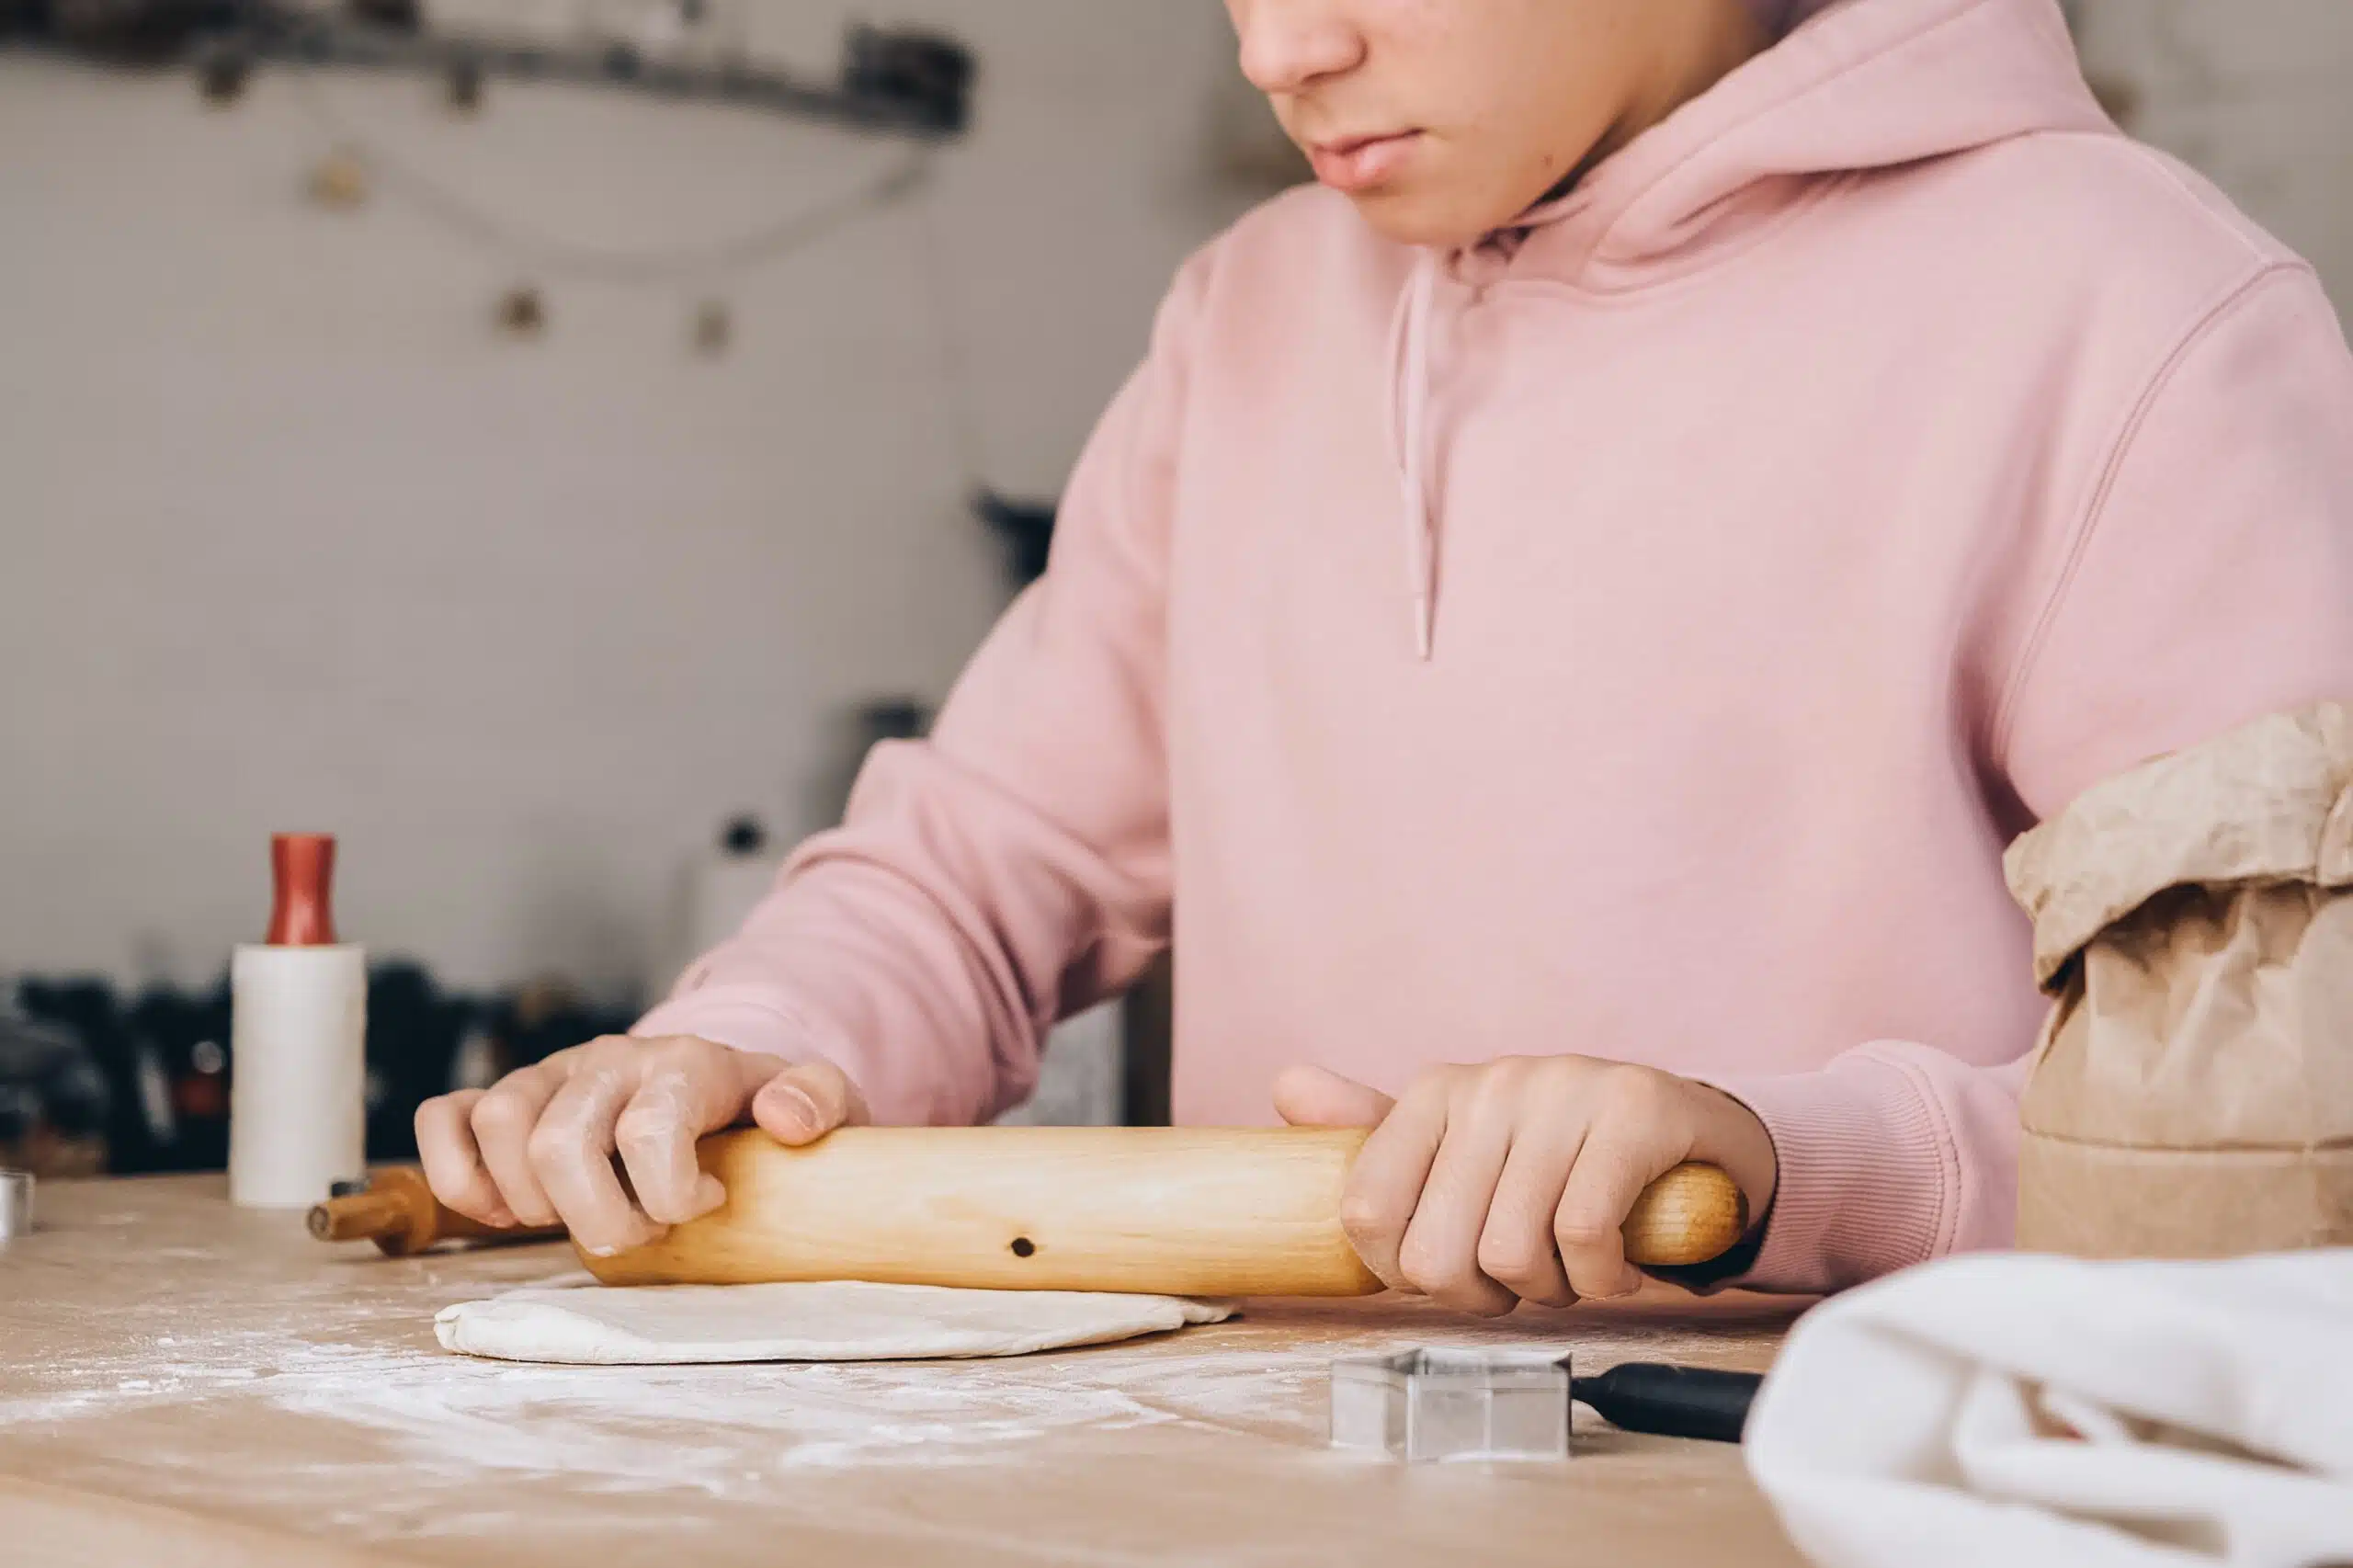 Teenage foster child making pizza